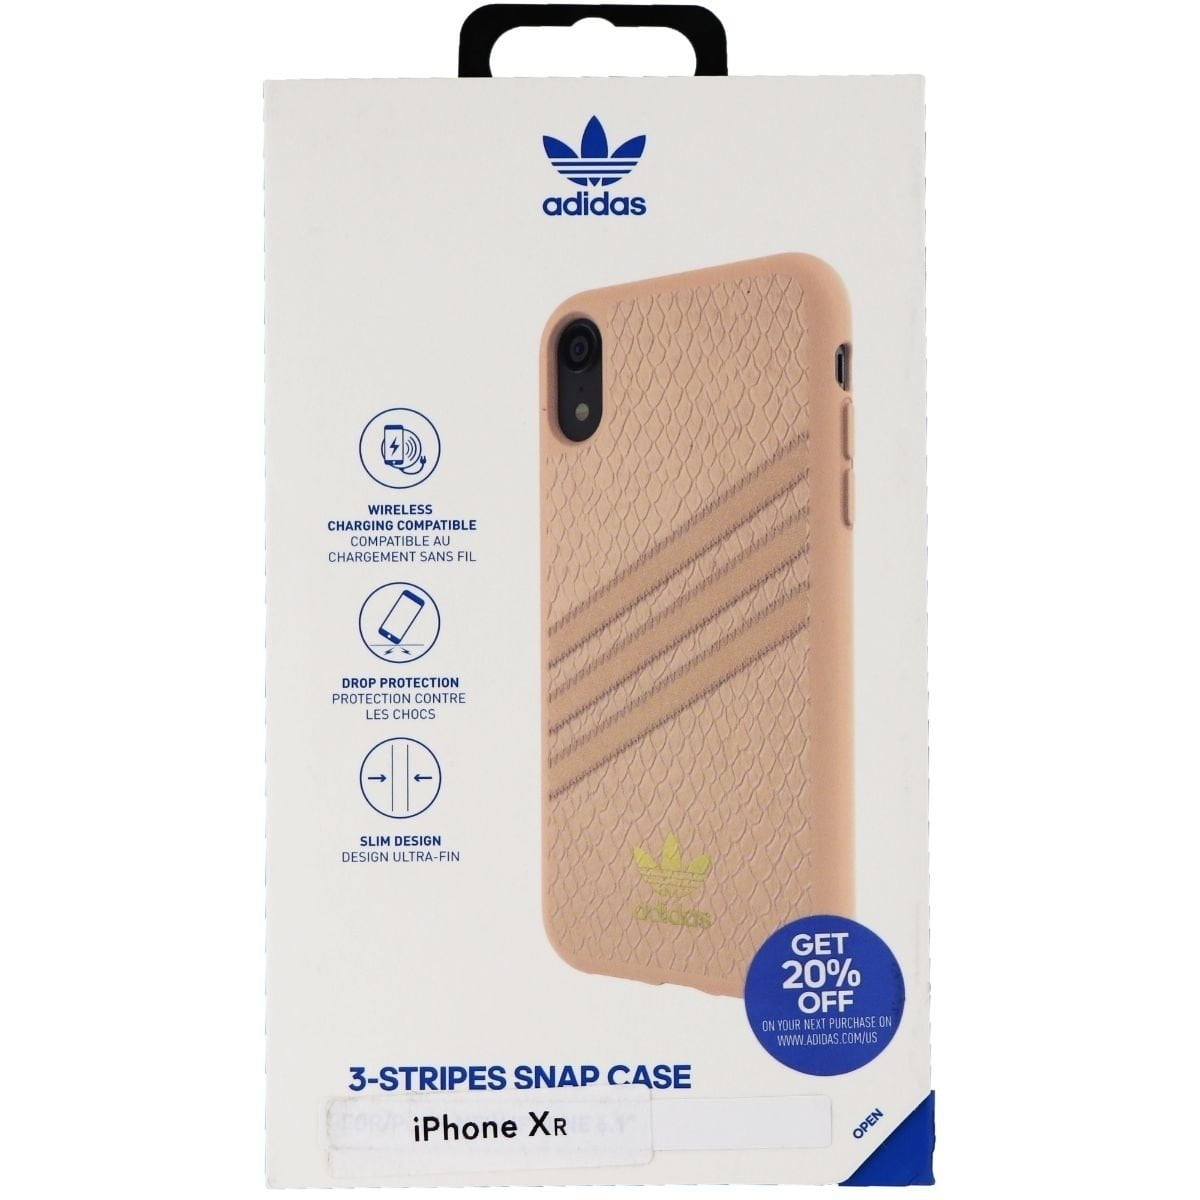 nikkel bros Tub Adidas Snake Moulded 3-Stripes Snap Case for iPhone XR - Pink/Gold Metallic  - Walmart.com